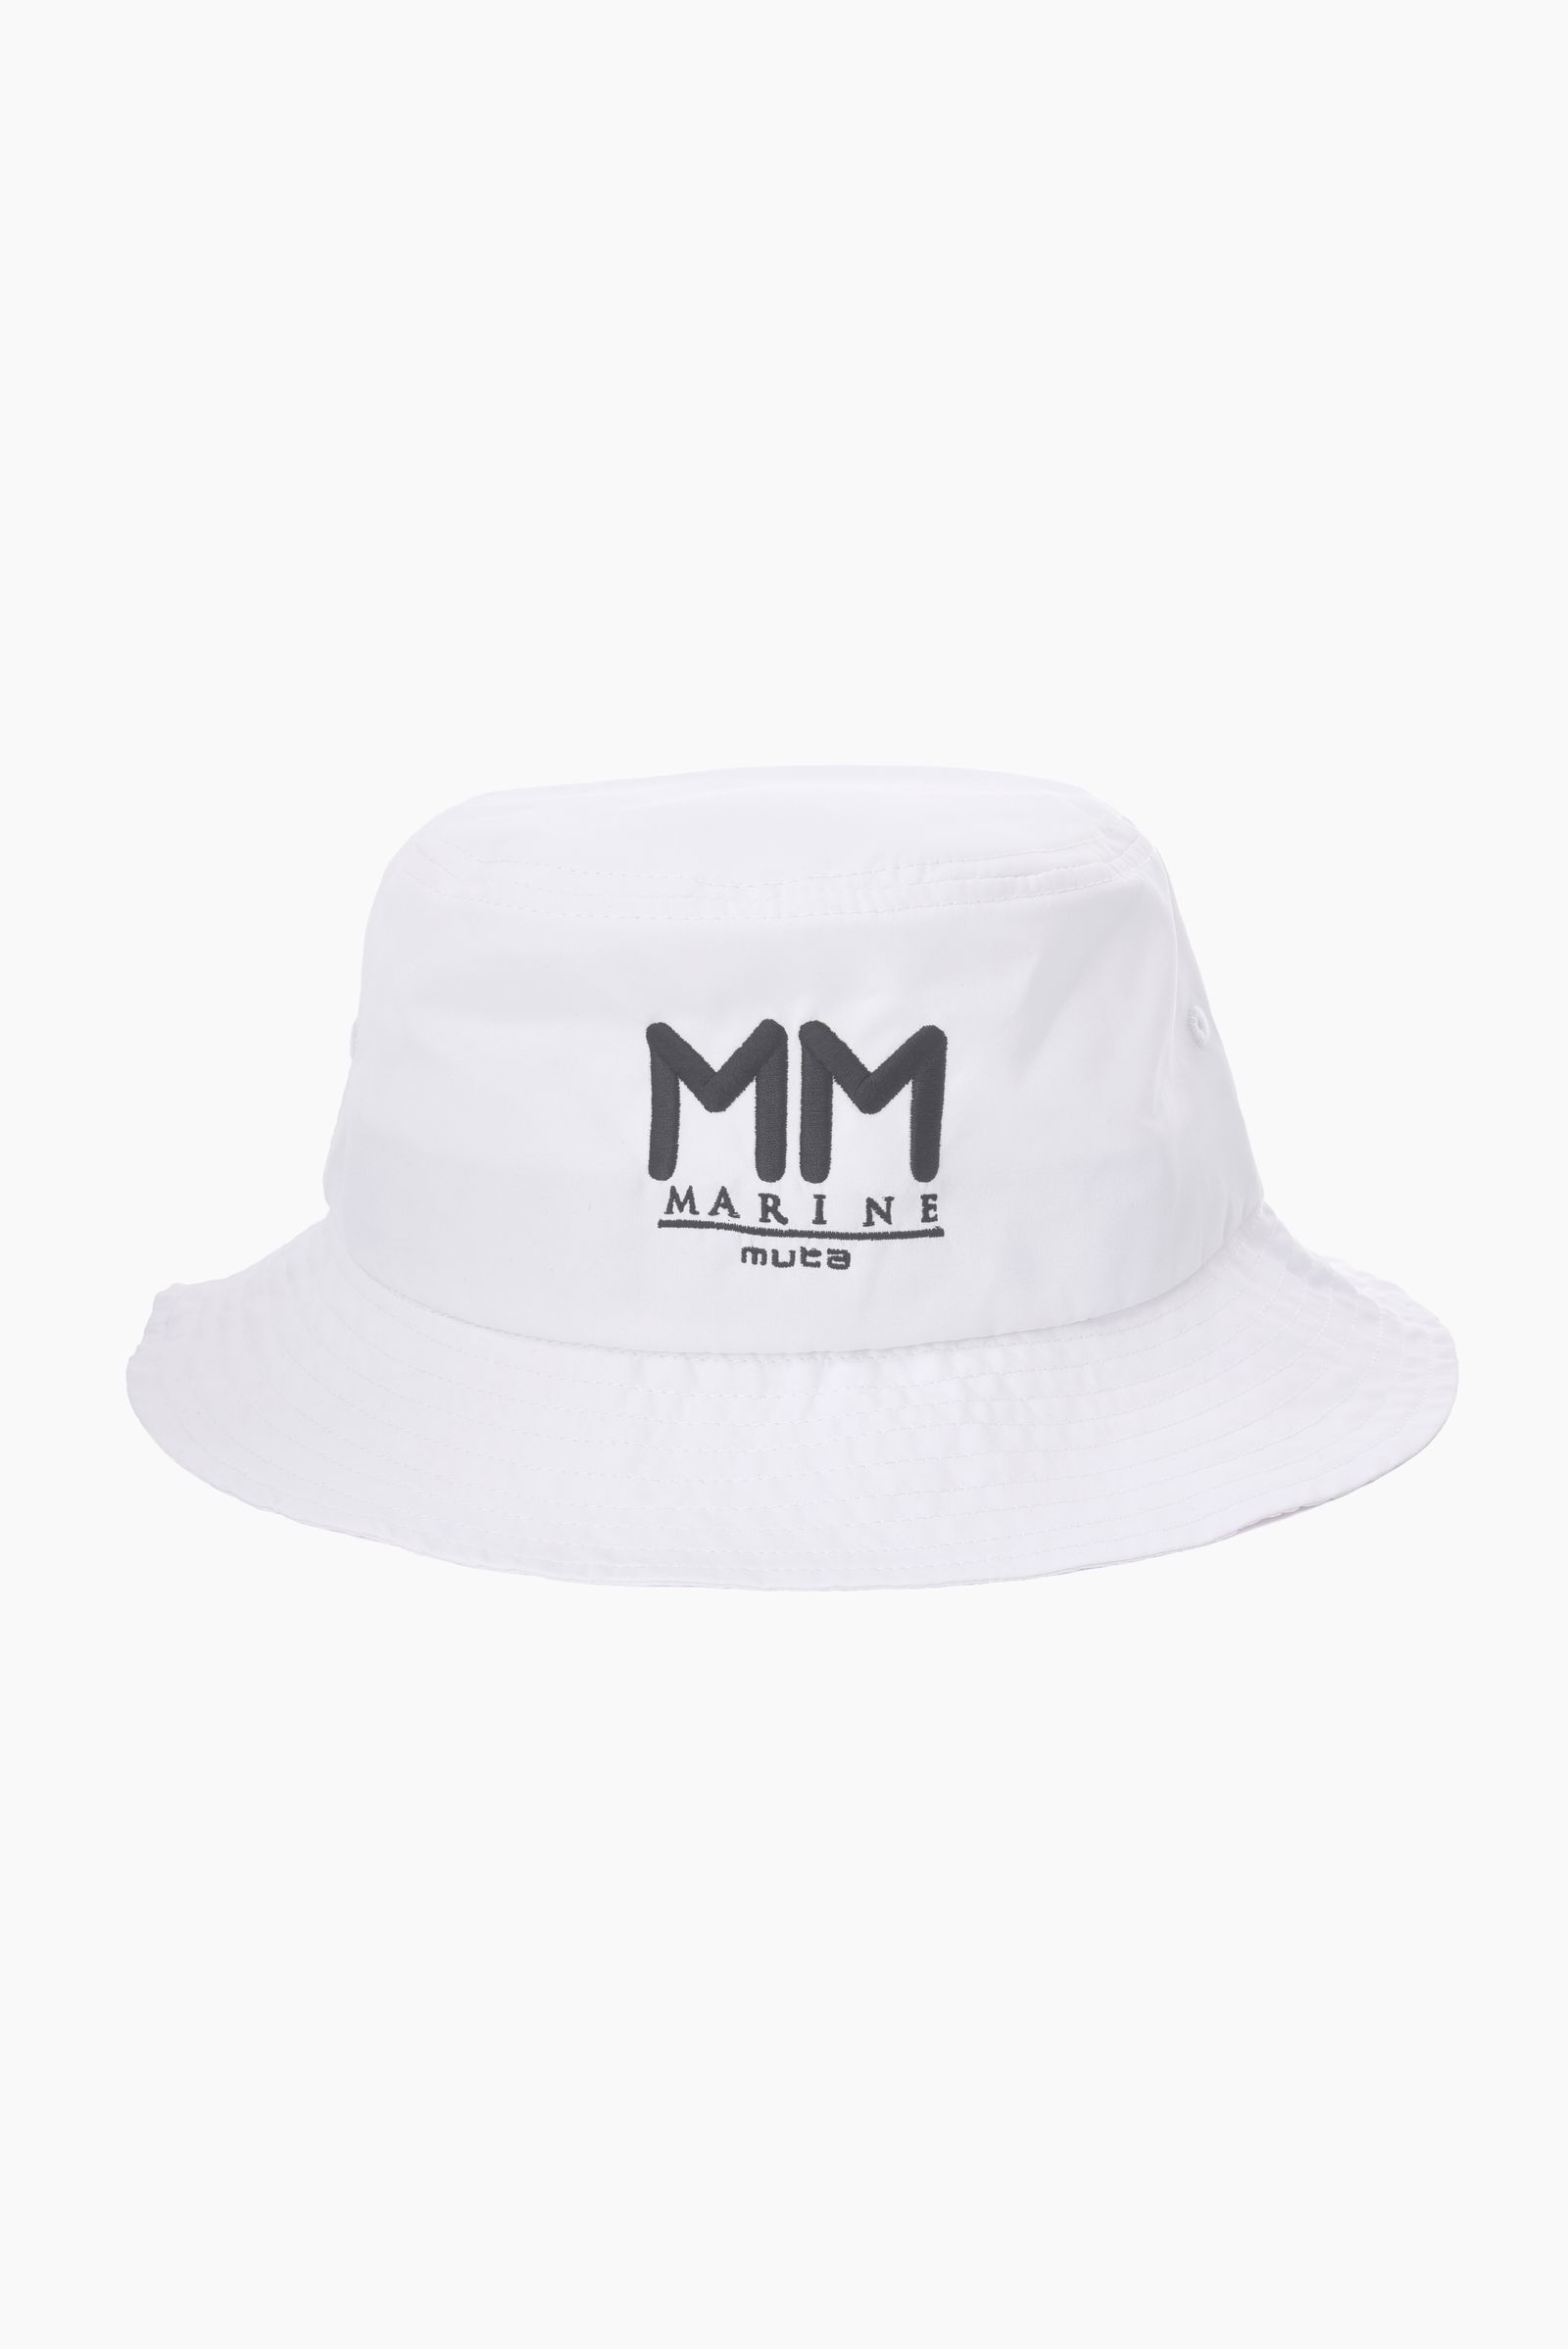 muta - 【GOSSIP GOLF限定商品】 MM EMBROIDERY BUCKET HAT / 別注 MM ...